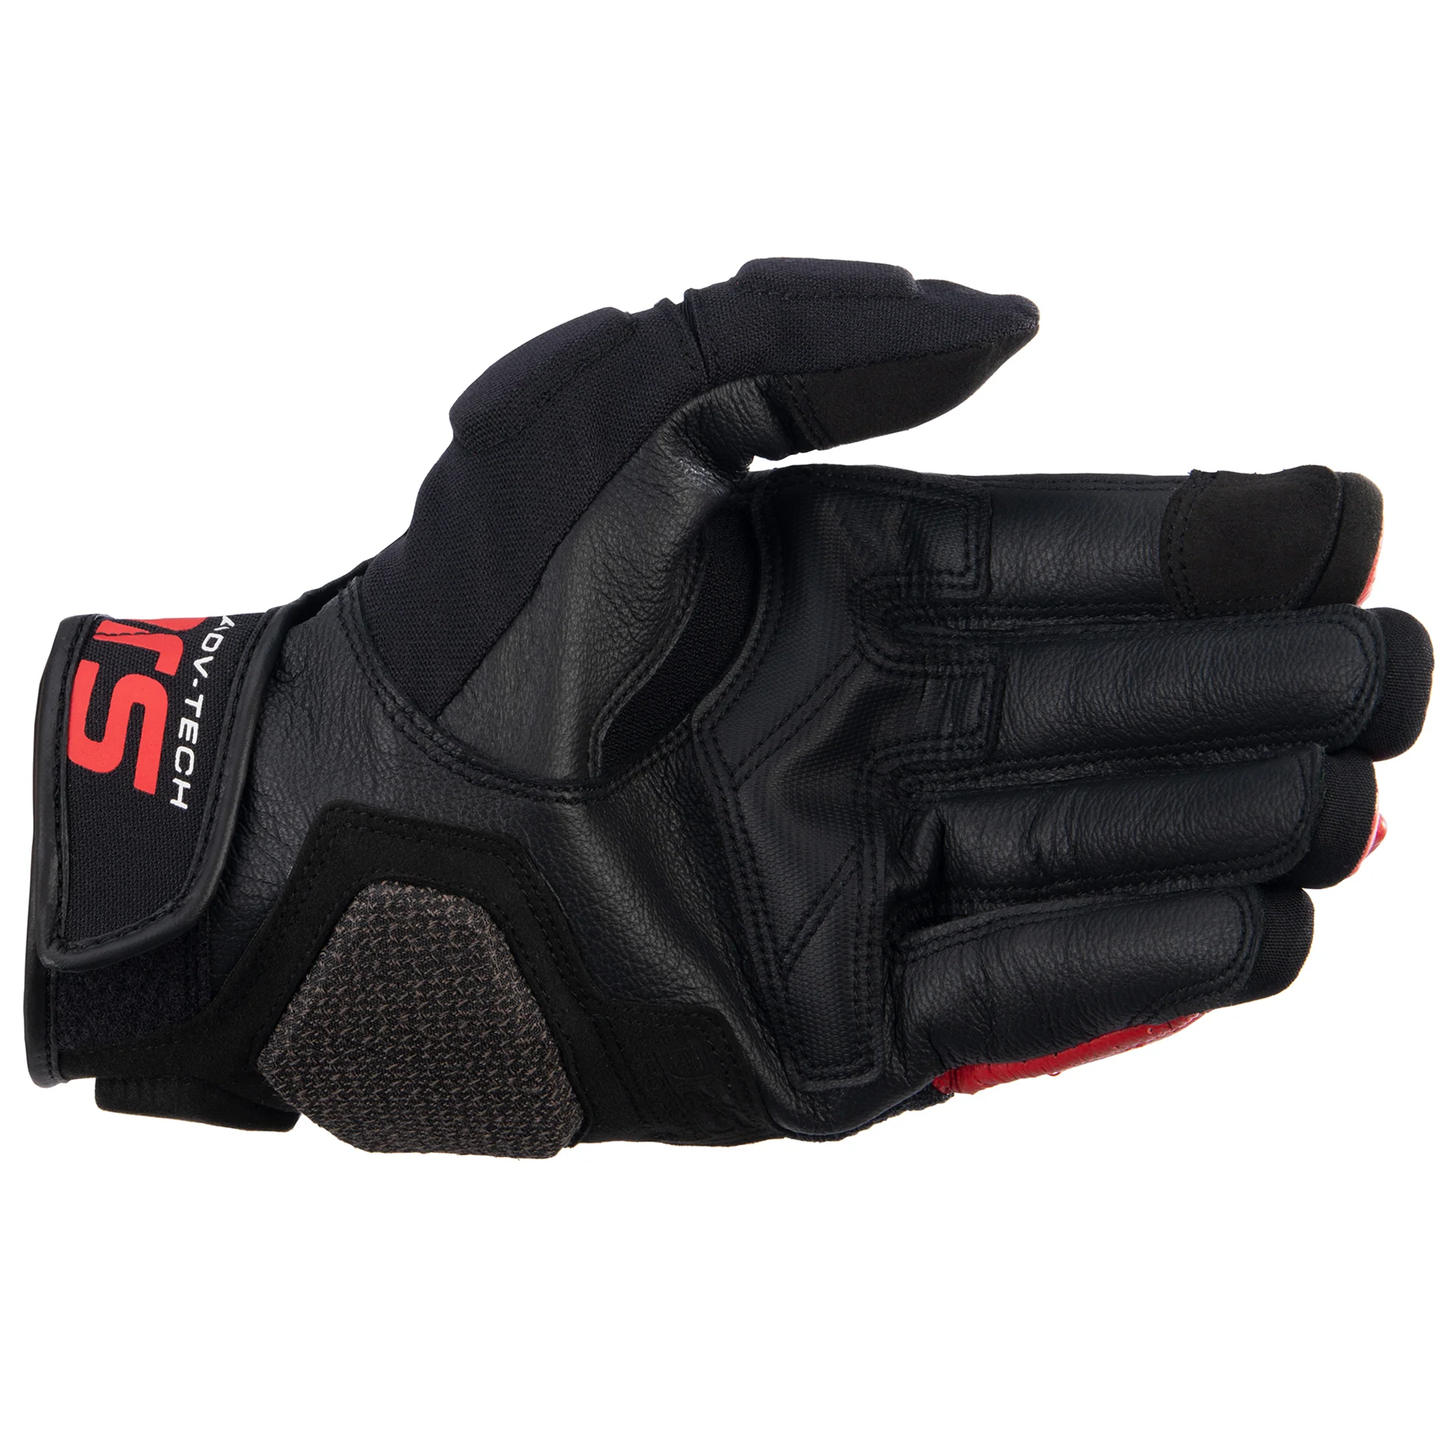 Alpinestars Halo Leather Gloves - Black/White/Bright Red